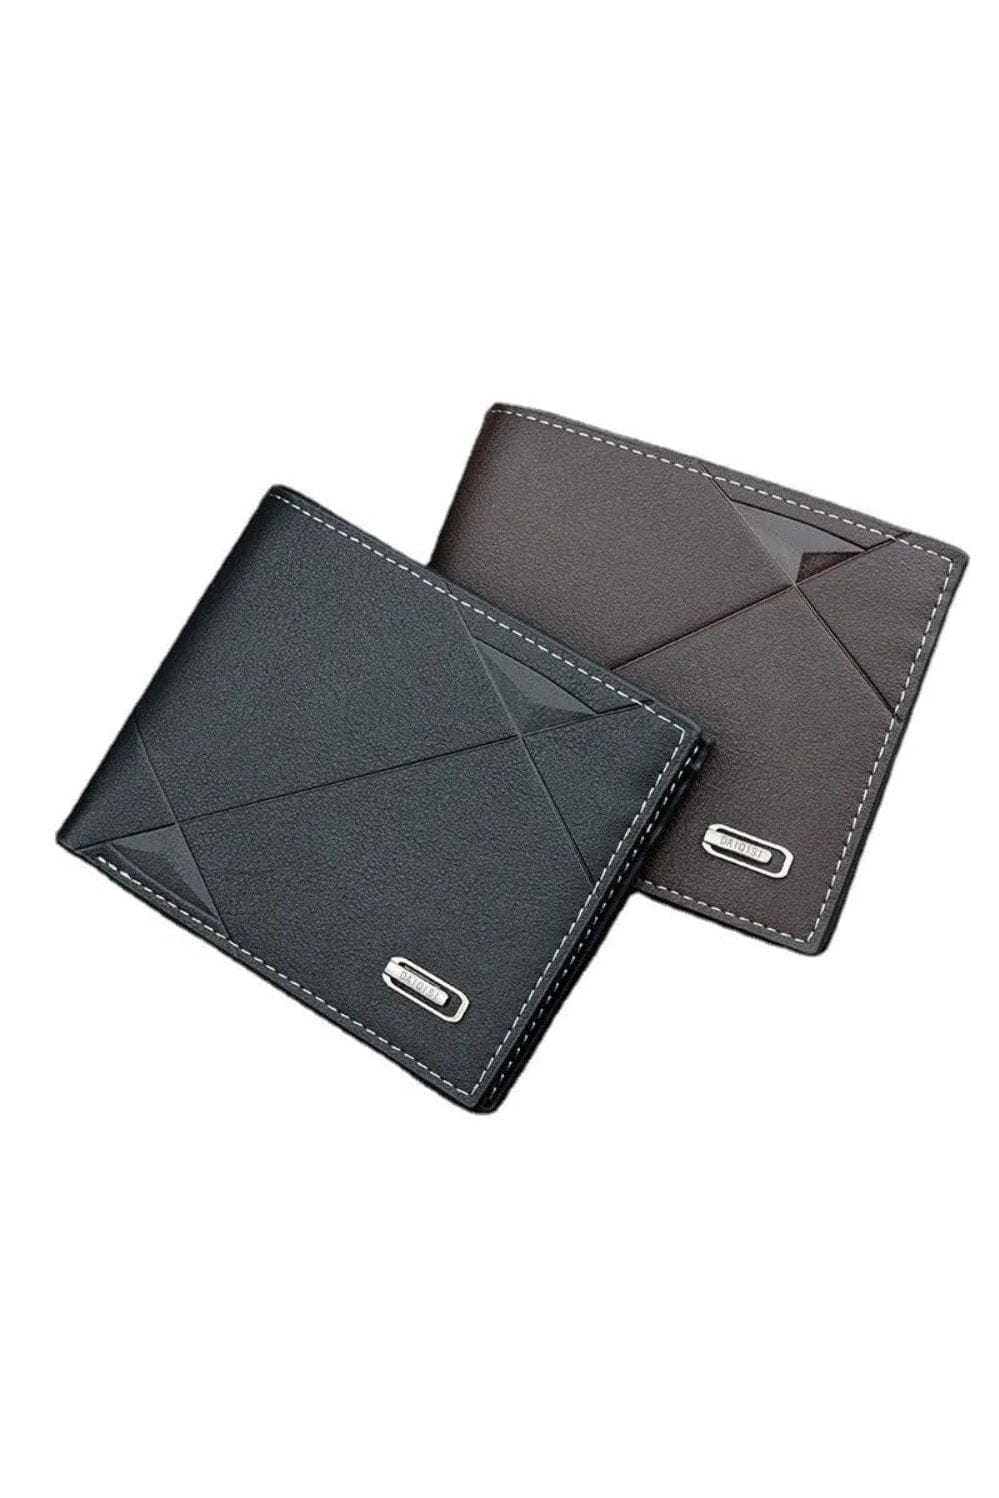 Classic Men's Leather Wallet